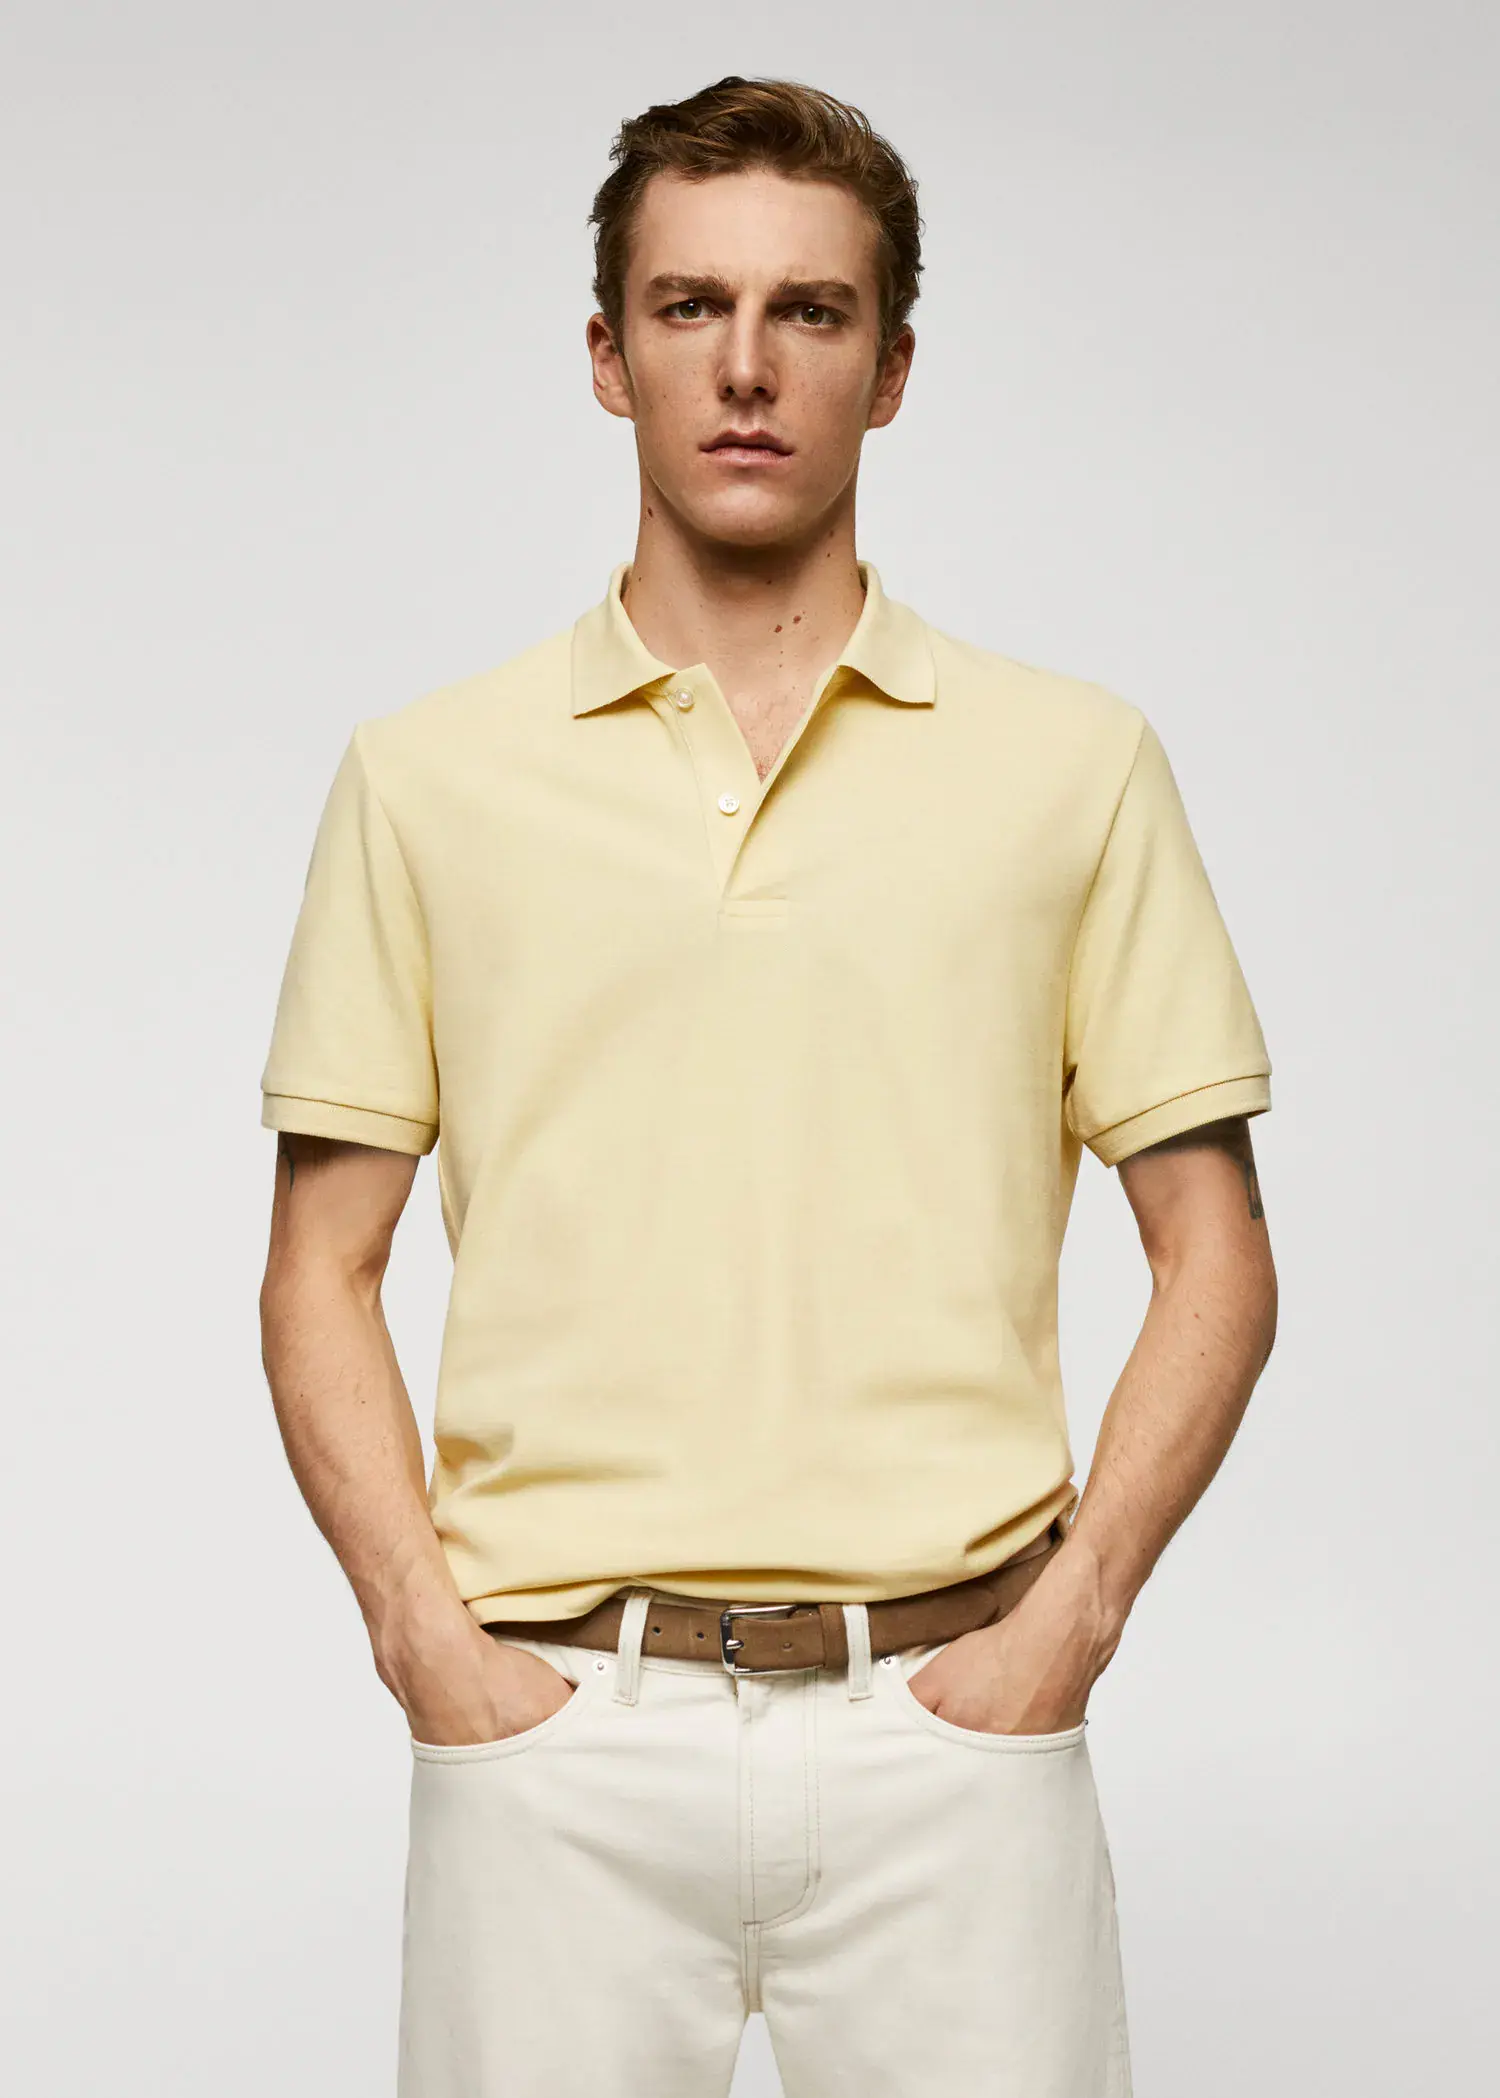 Mango 100% cotton pique polo shirt. a man in a yellow polo shirt and white pants. 